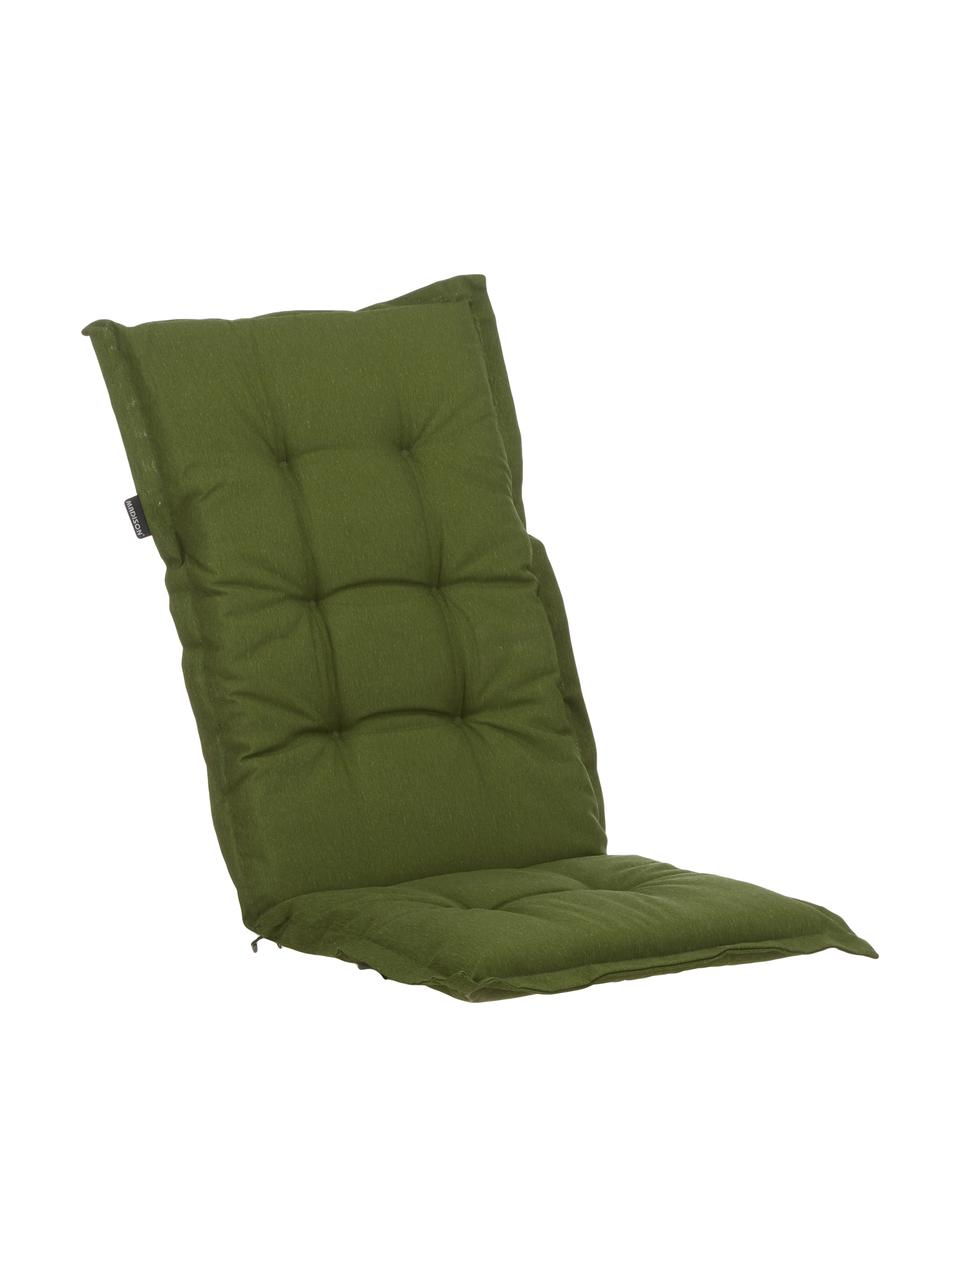 Einfarbige Hochlehner-Stuhlauflage Panama in Grün, Bezug: 50% Baumwolle, 45% Polyes, Grün, 50 x 123 cm